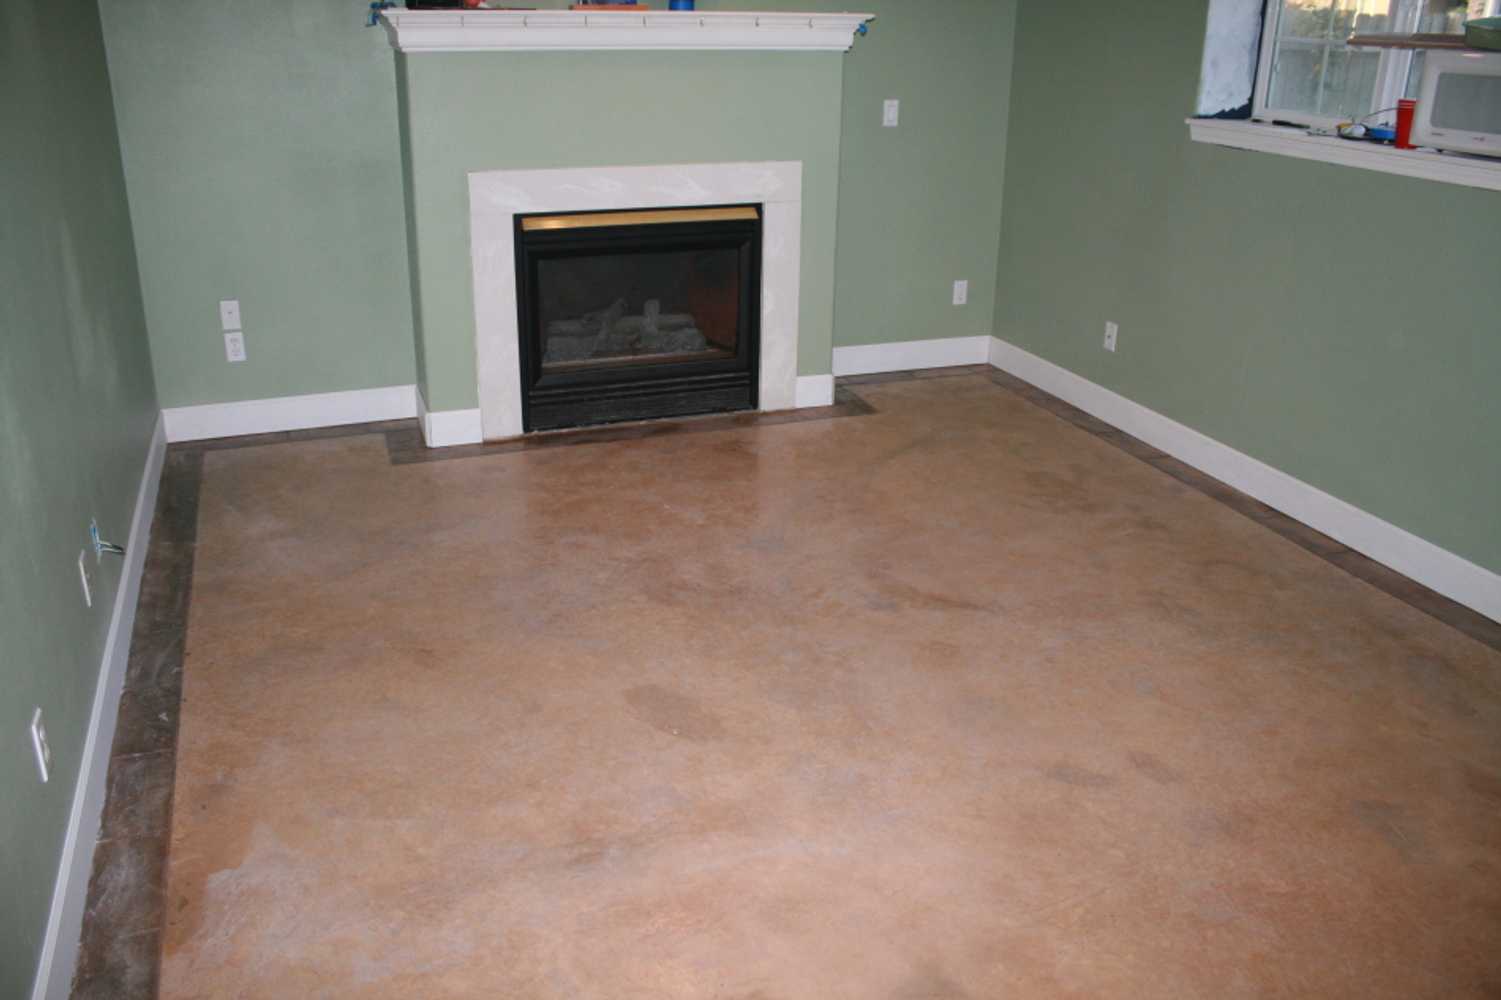 Icoat concrete interior flooring overlay system.